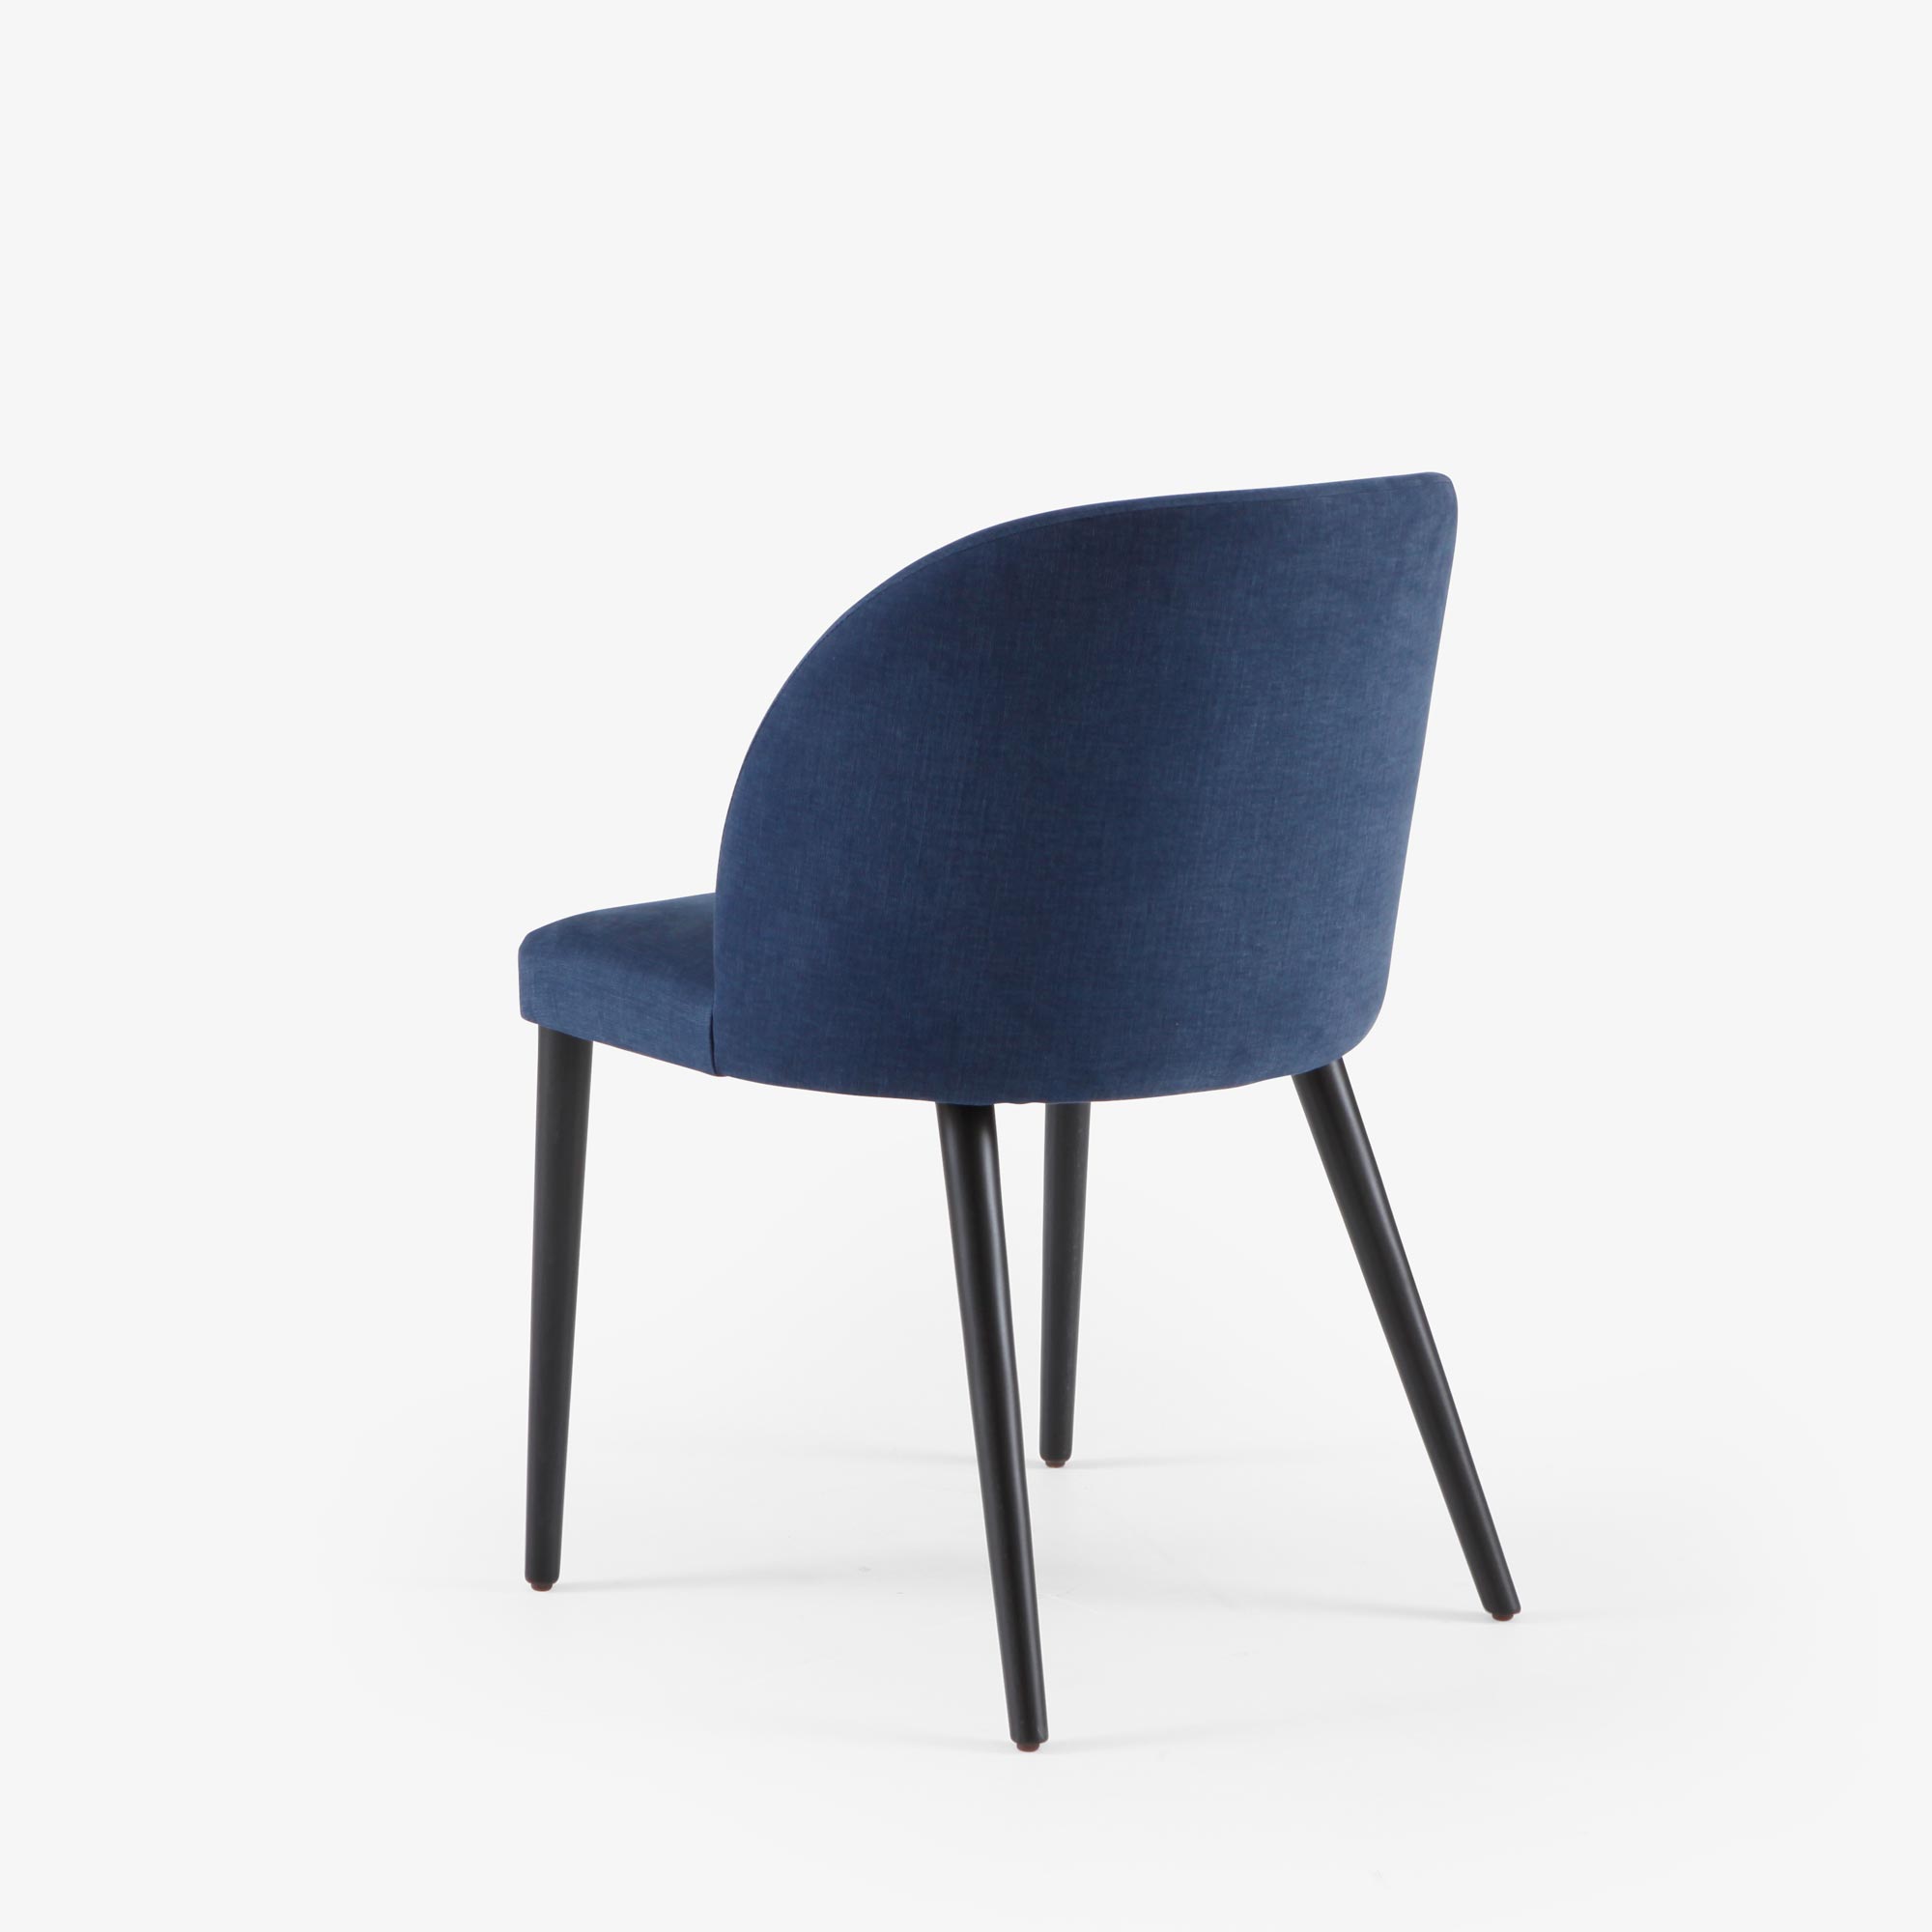 Image Chair fabric-bleu nuit (midnight blue)  4